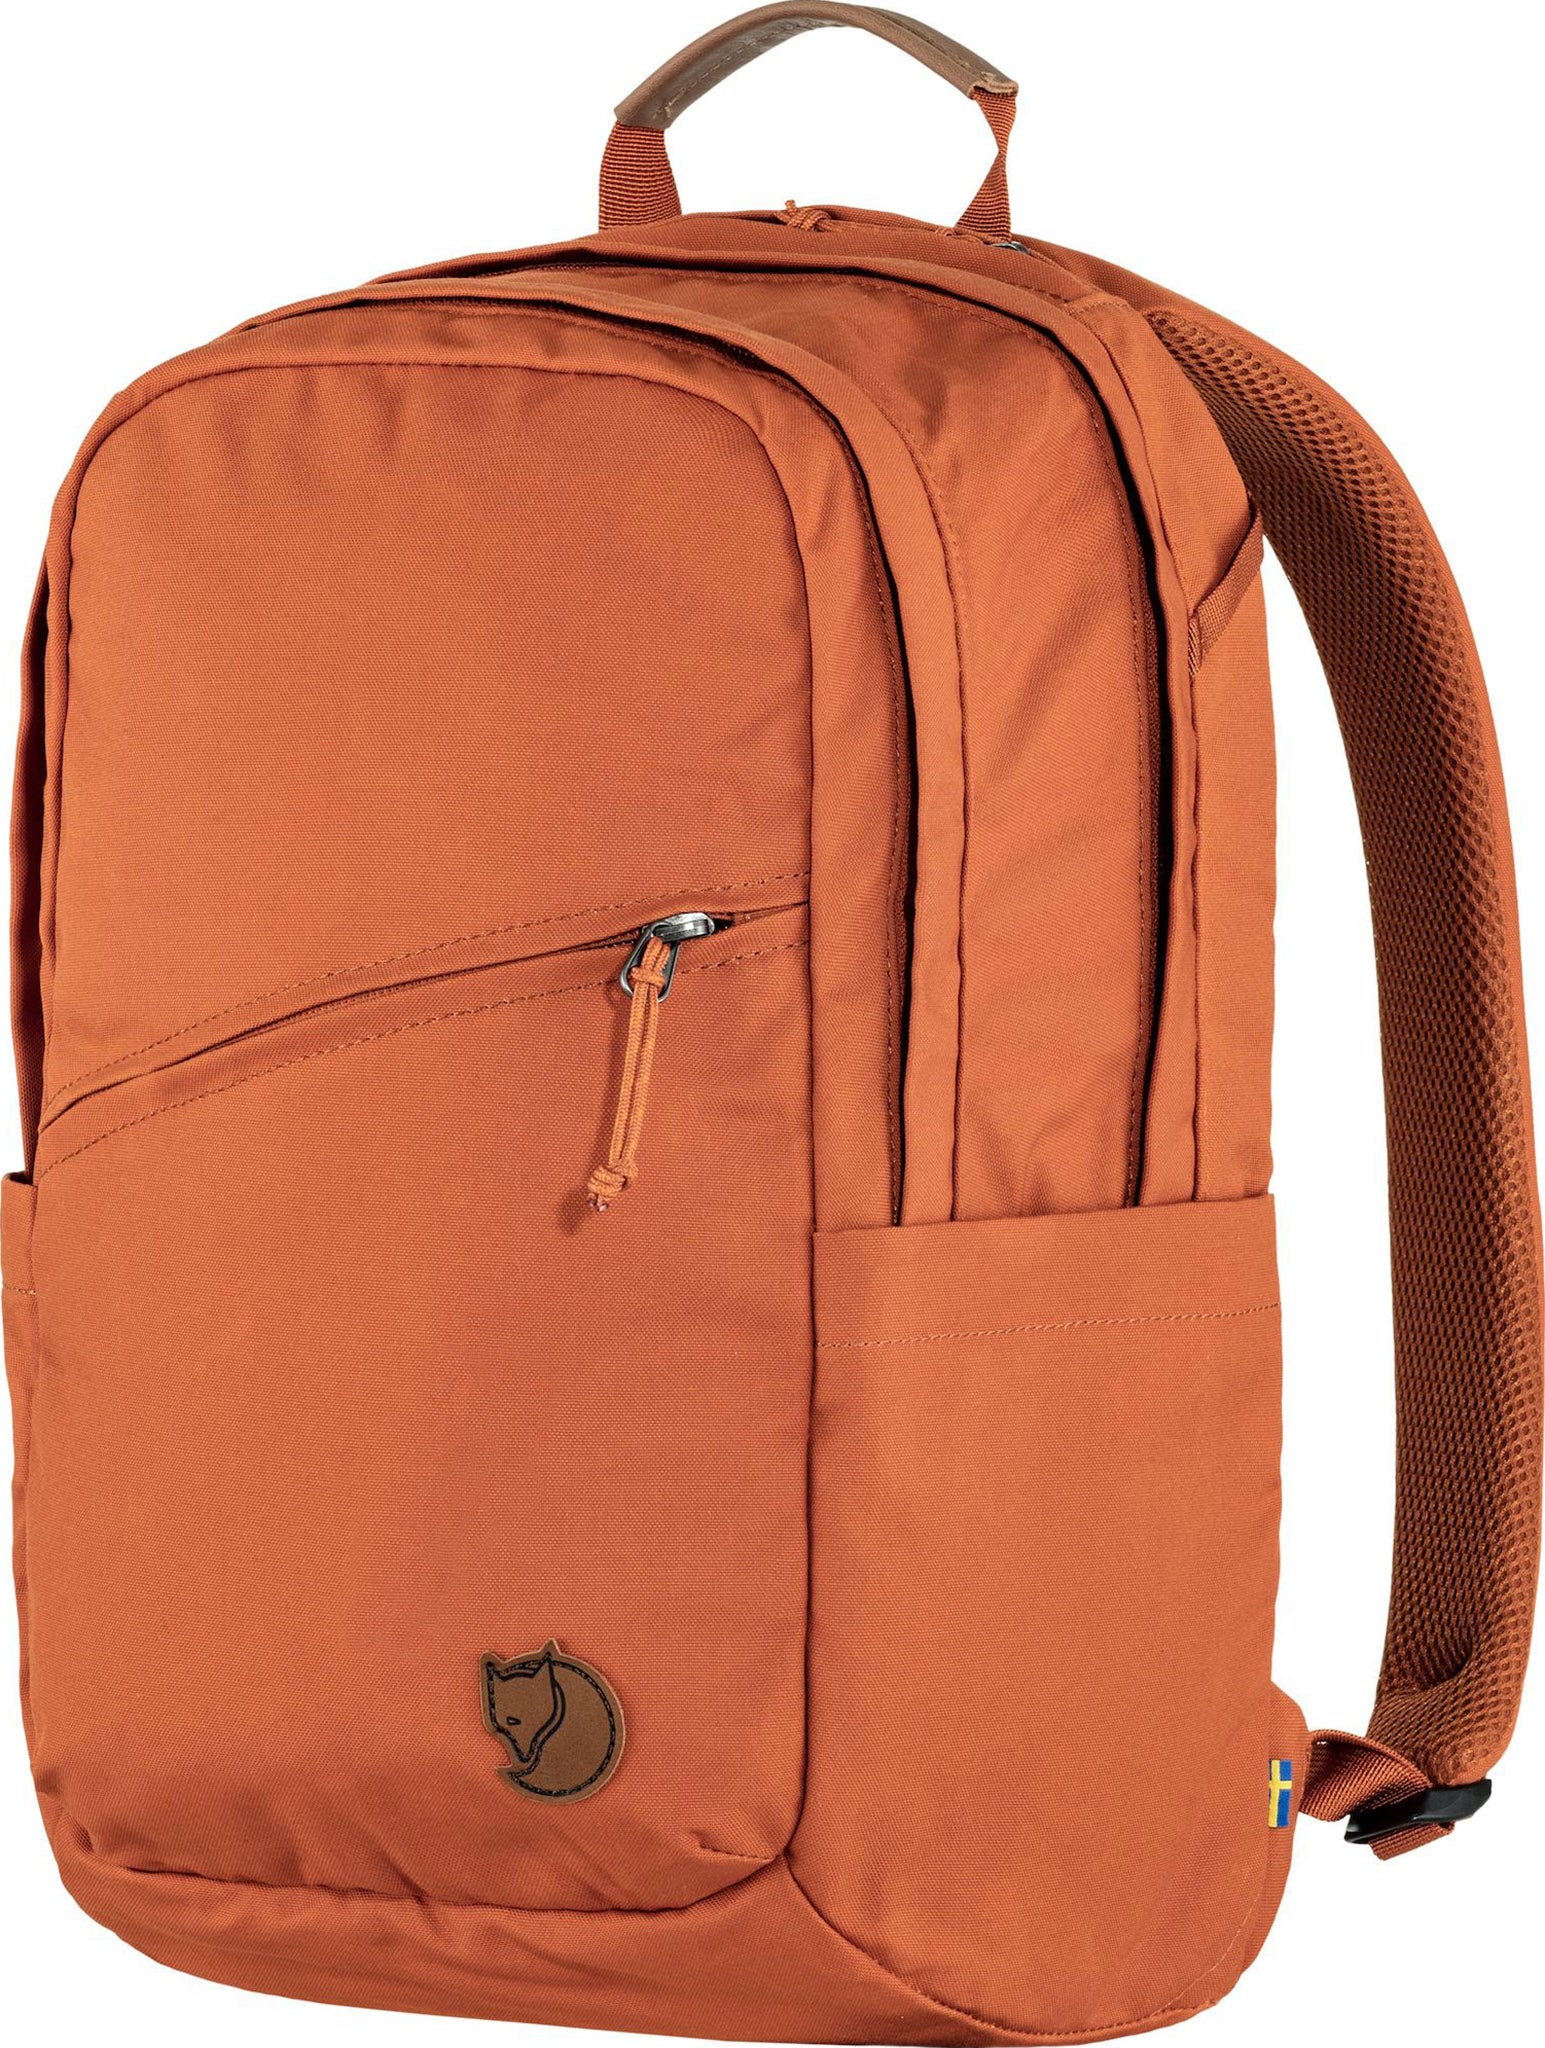 zk Importers LV Lvv backpack unisex 5 L Backpack Brown - Price in India